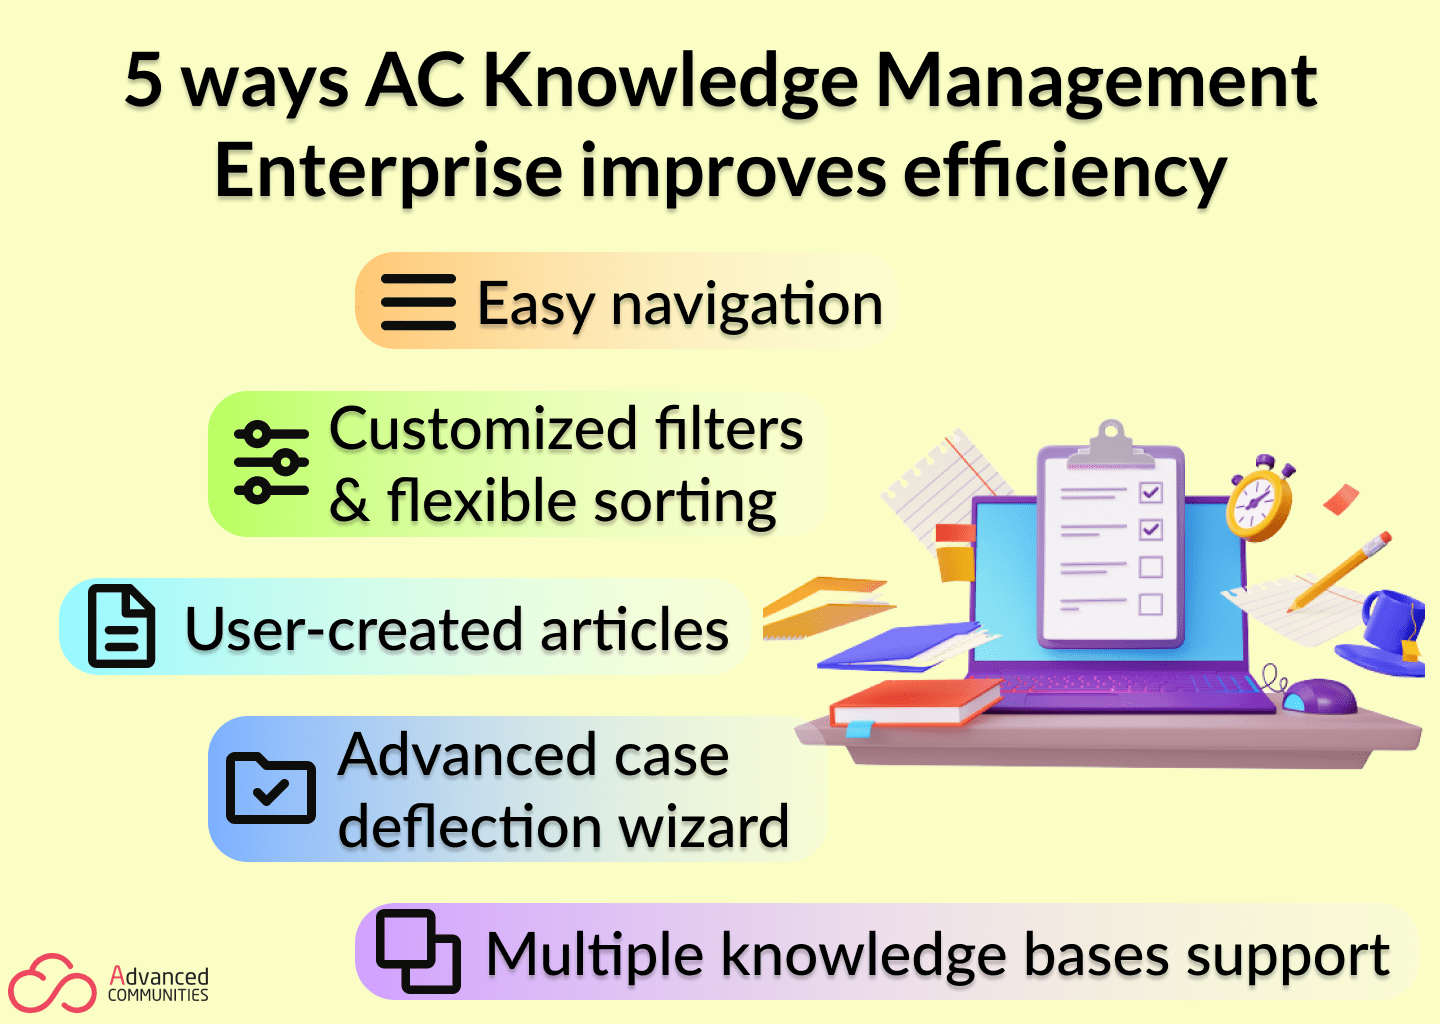 How AC Knowledge Management Enterprise improves support efficiency